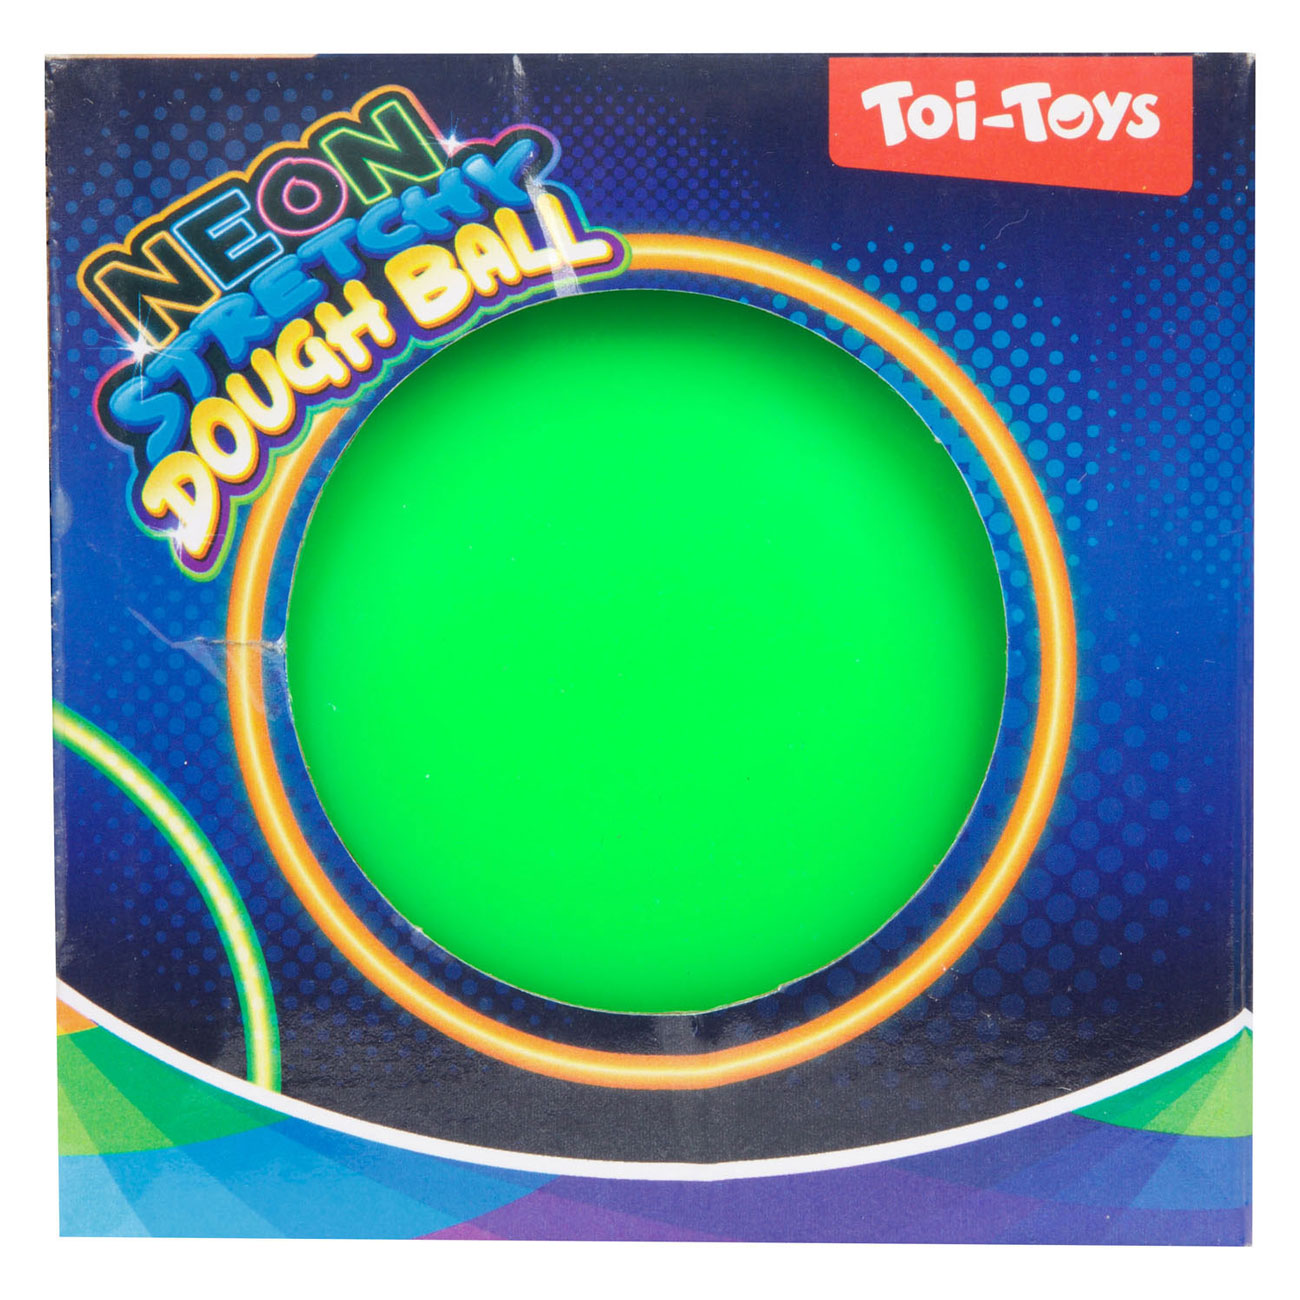 Lustiger Knetball Neon, 10cm